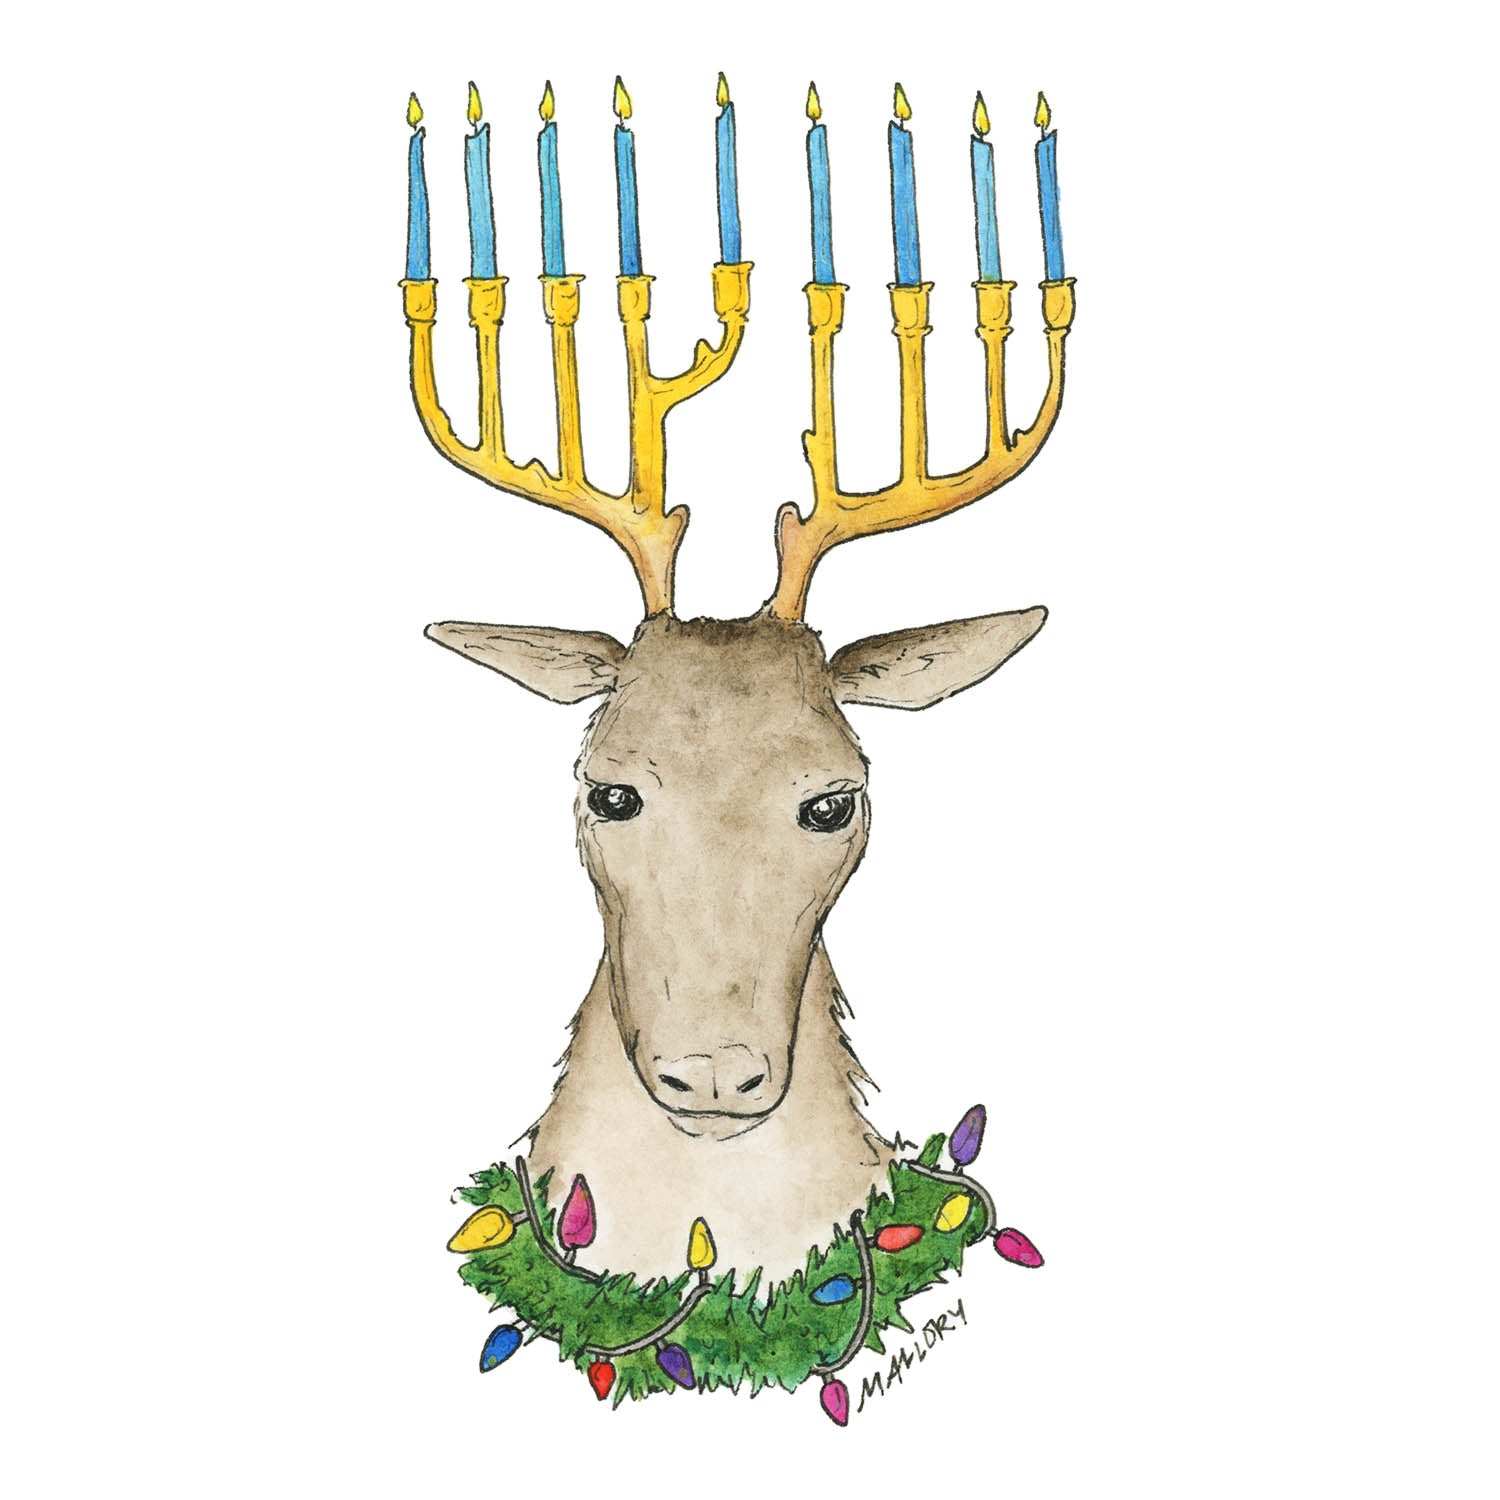 Reindeer Menorah Hanukkah and Christmas Card